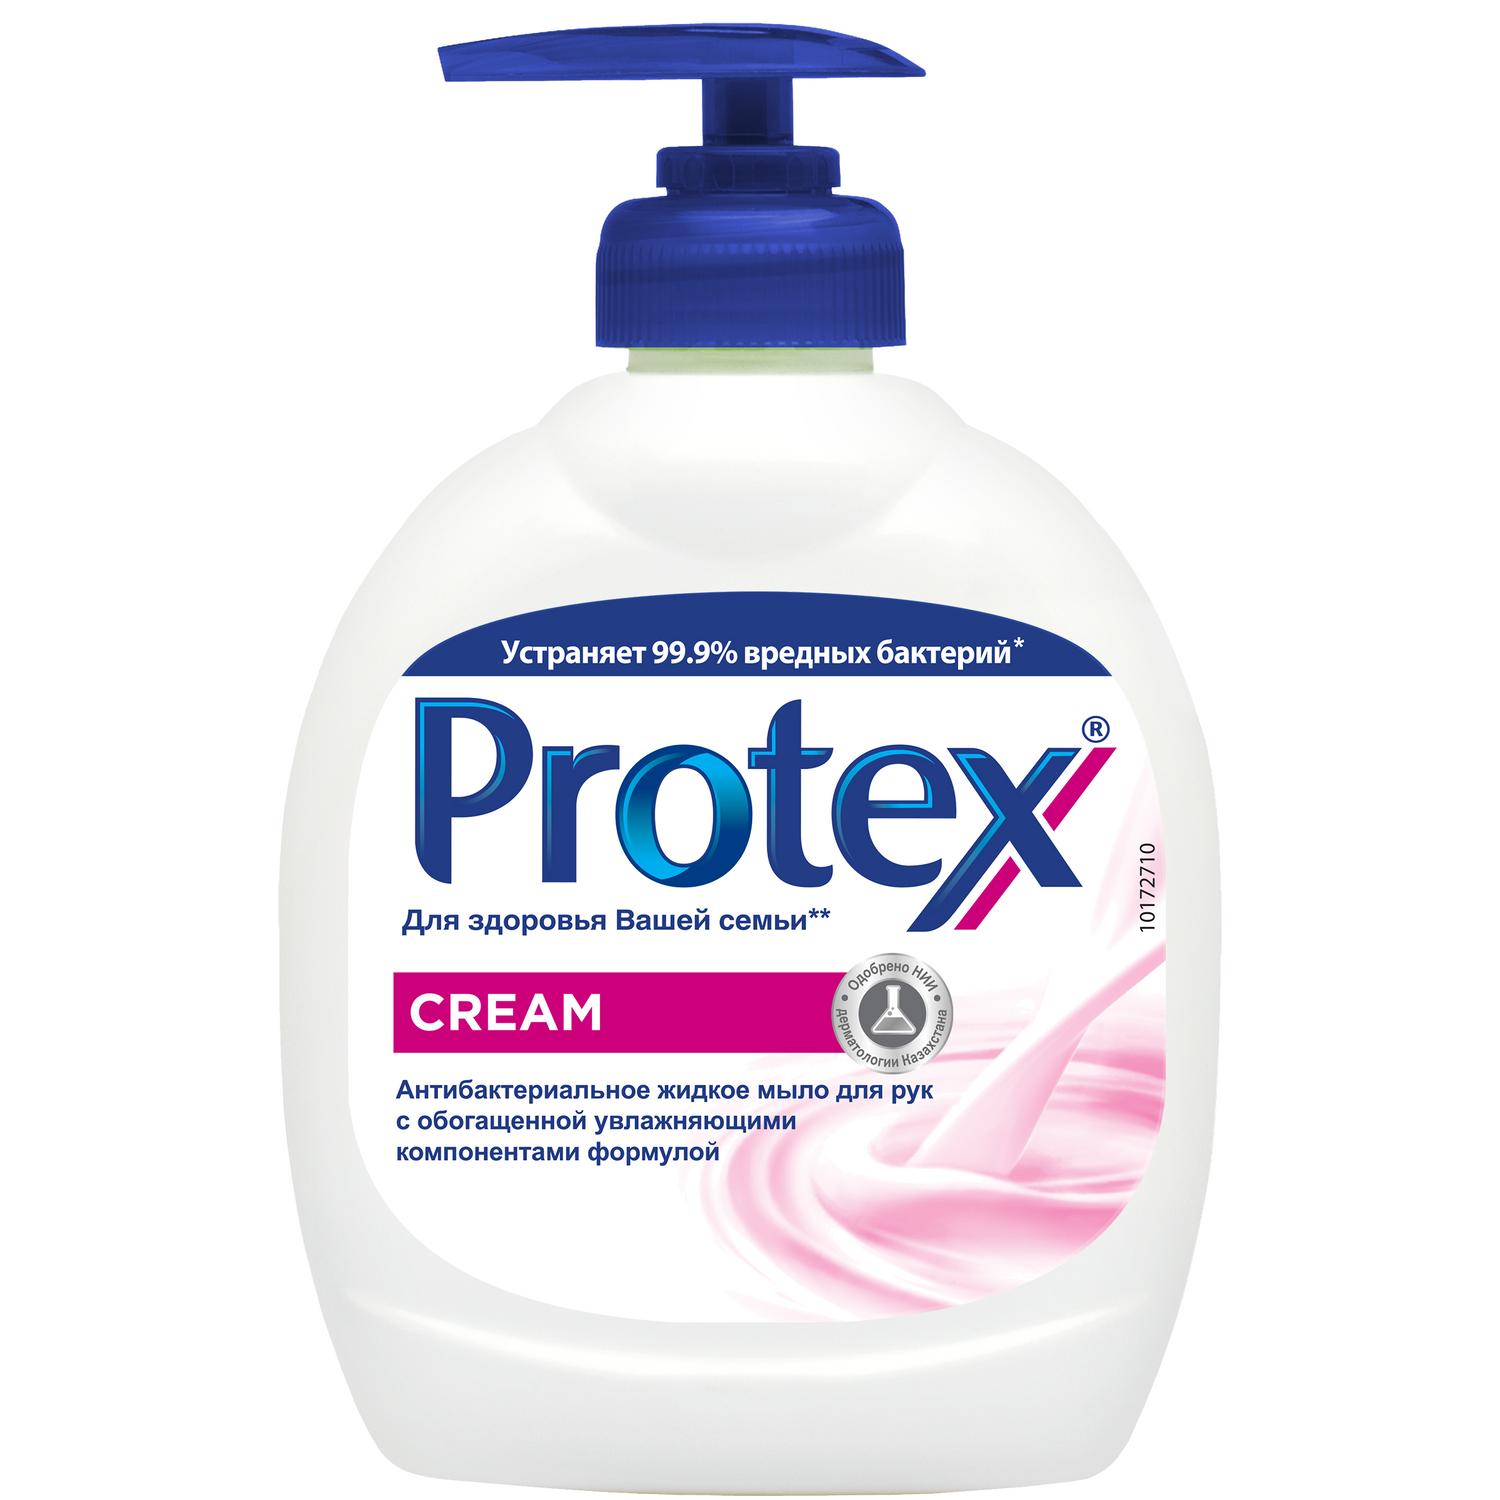 Protex Антибактериальное жидкое мыло для рук Cream, 300 мл жидкое мыло protex антибактериальное жидкое мыло для рук fresh 300мл